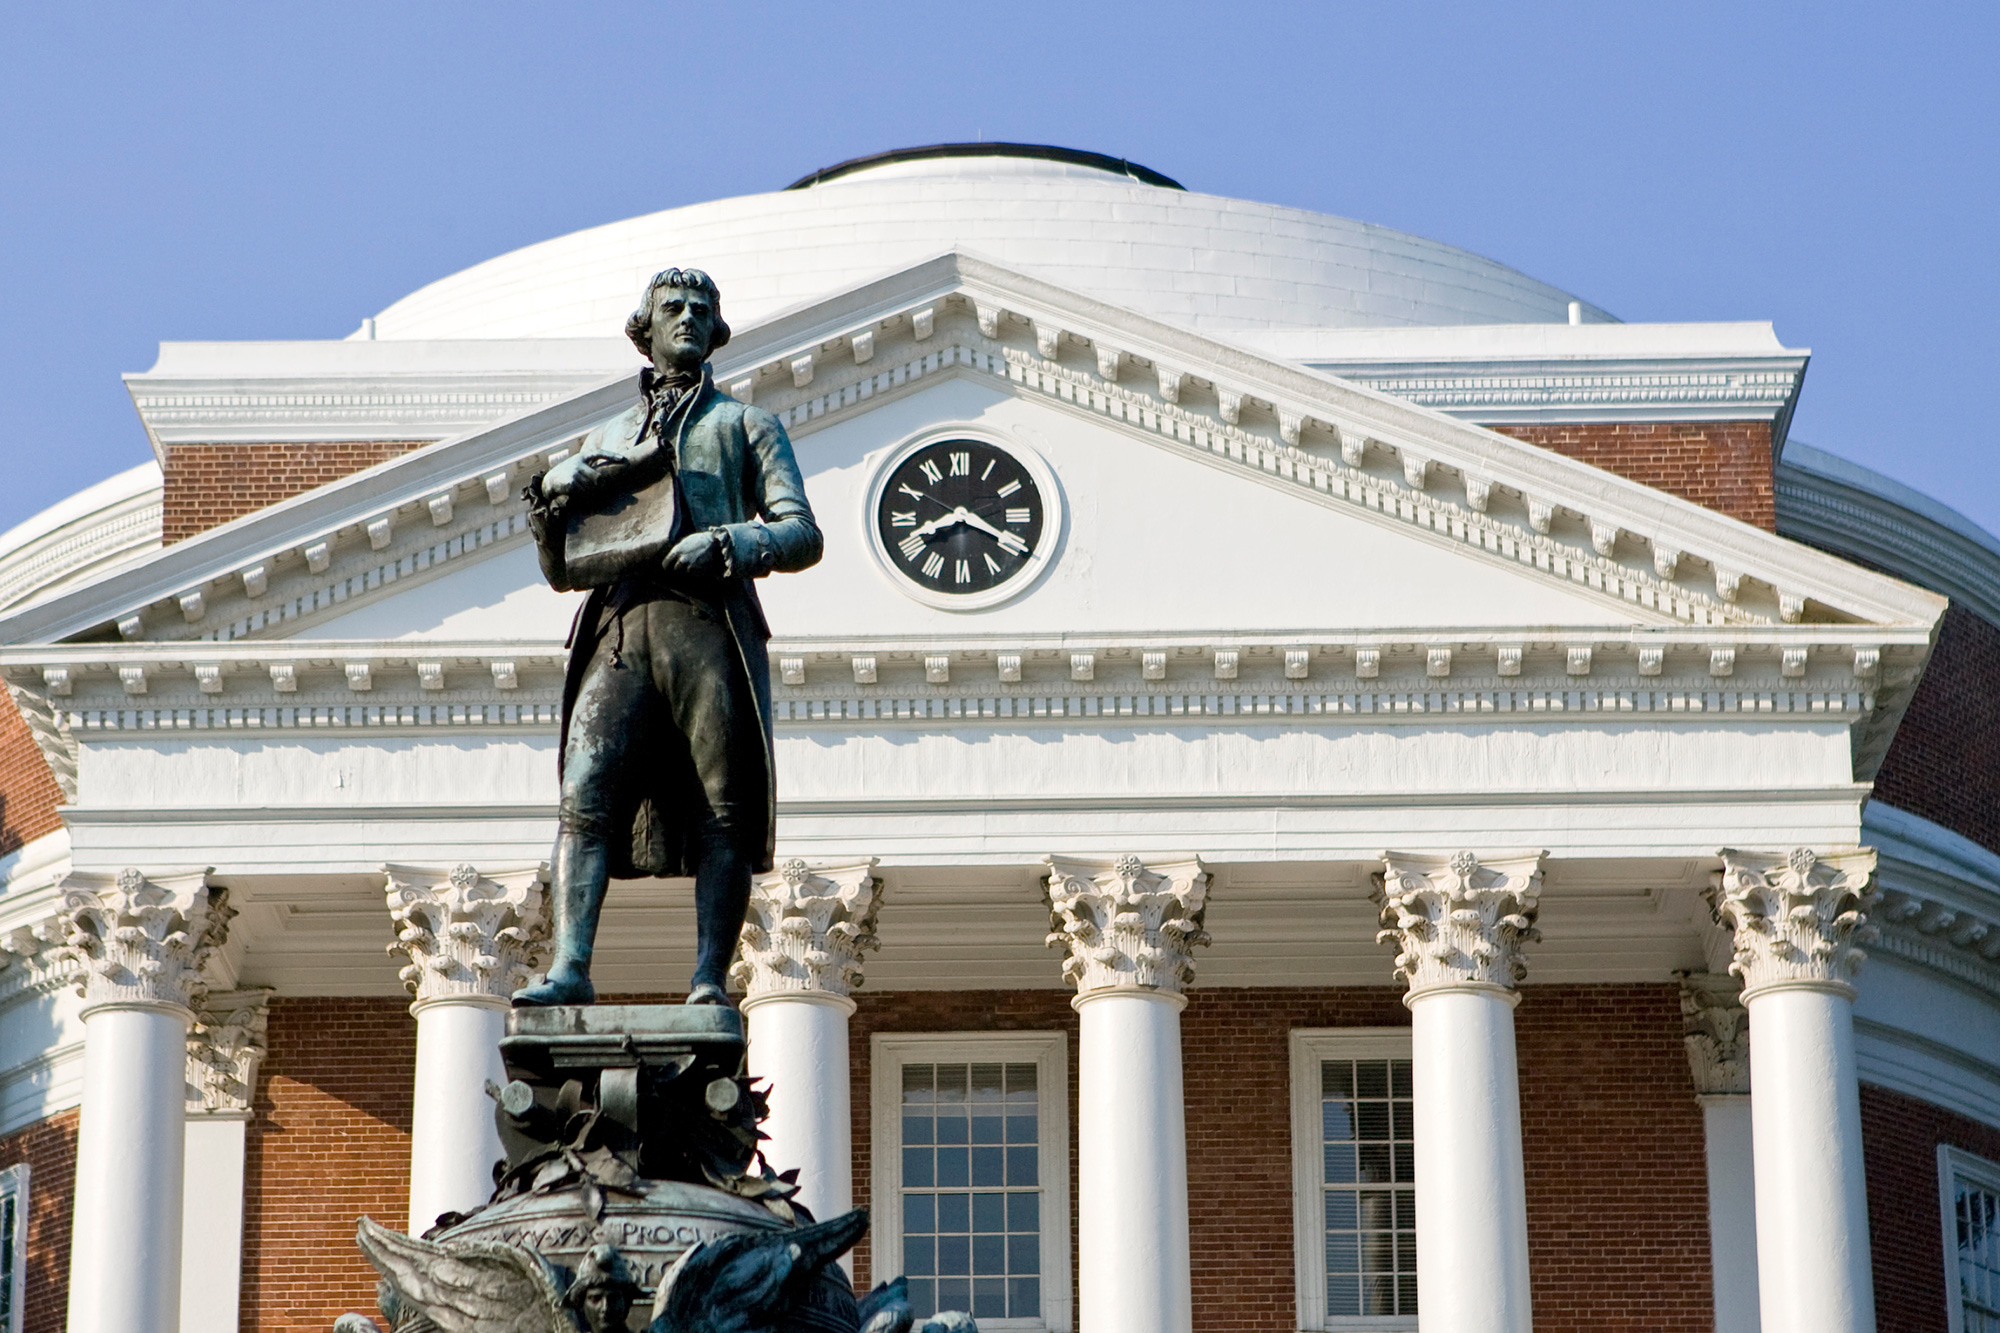 Thomas Jefferson Statue in front of the Rotunda